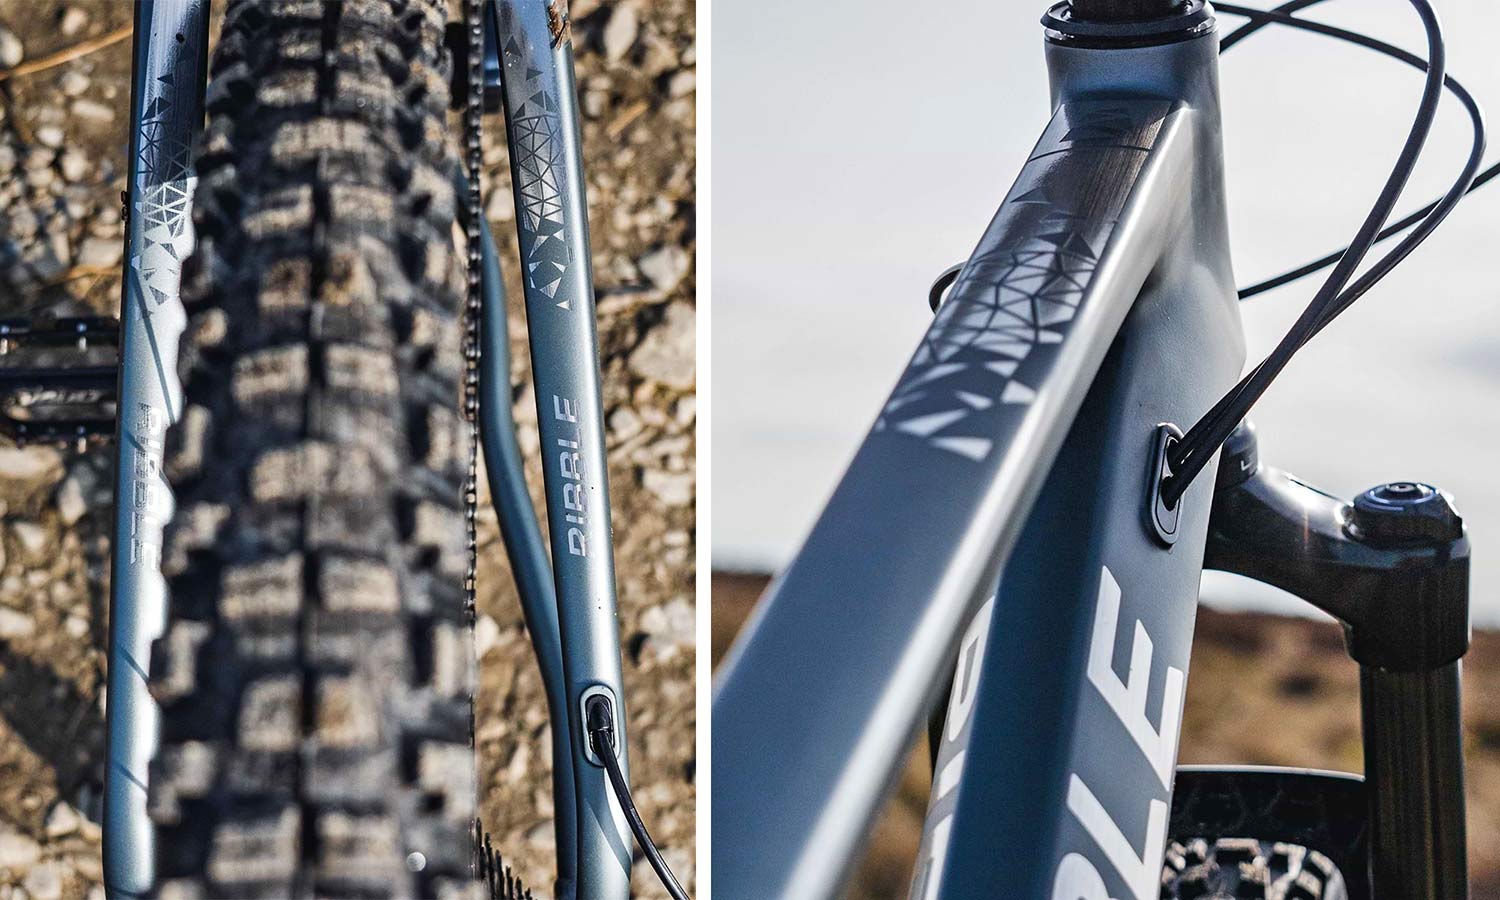 Ribble HT Trail AL 29 all-rounder hardtail 130mm fork mountain bike, frame details